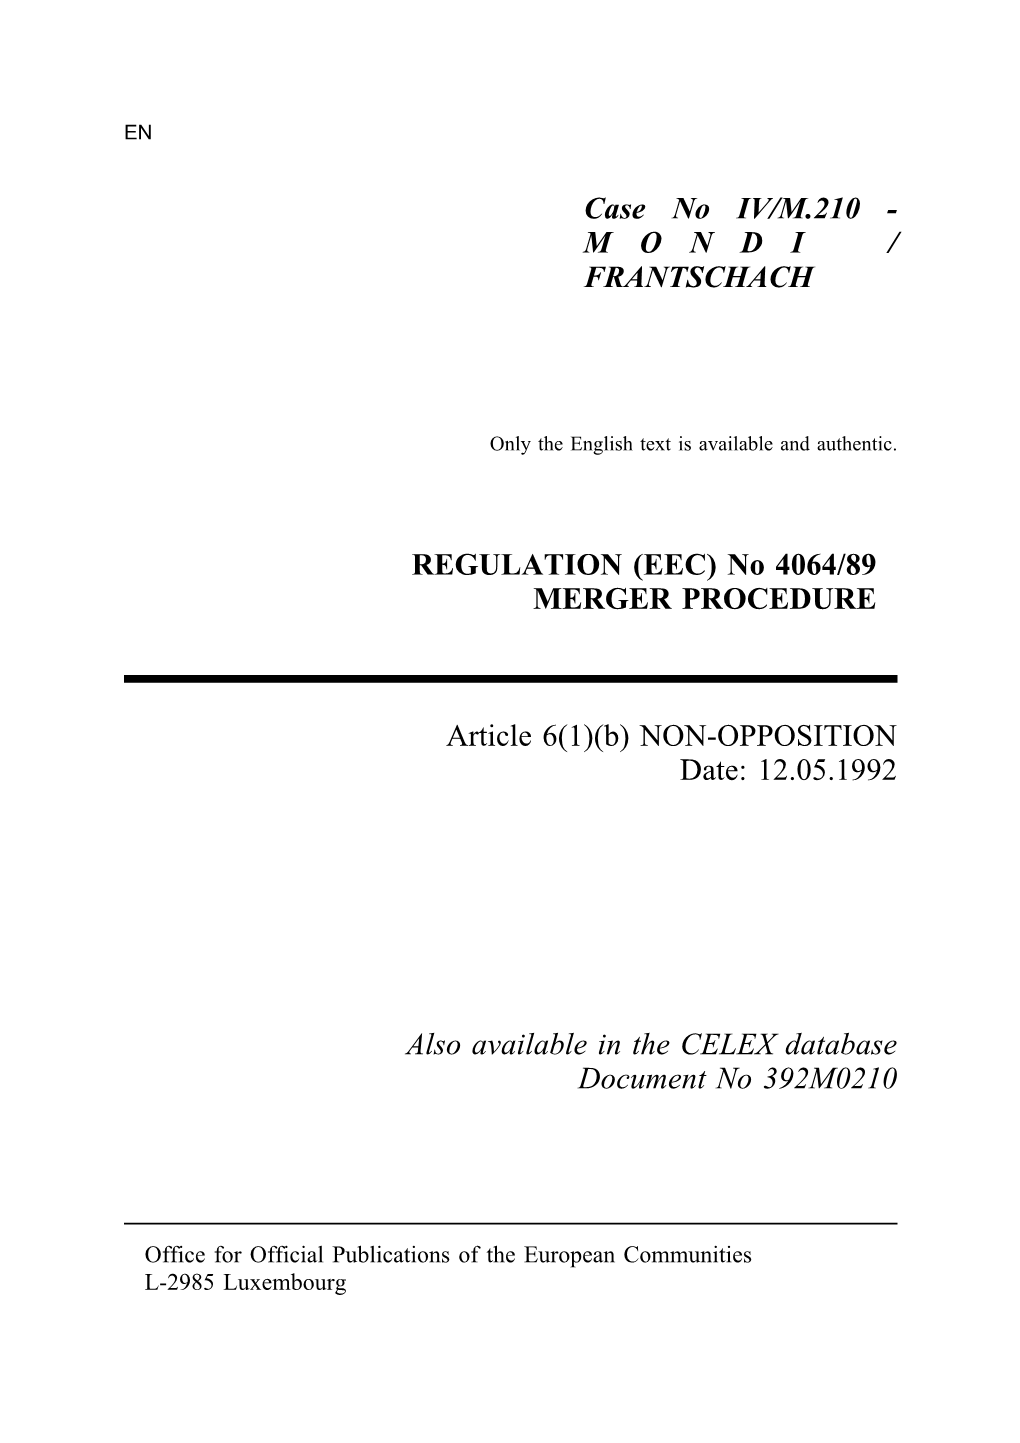 Merger Decision IV/M.210 of 12.05.1992